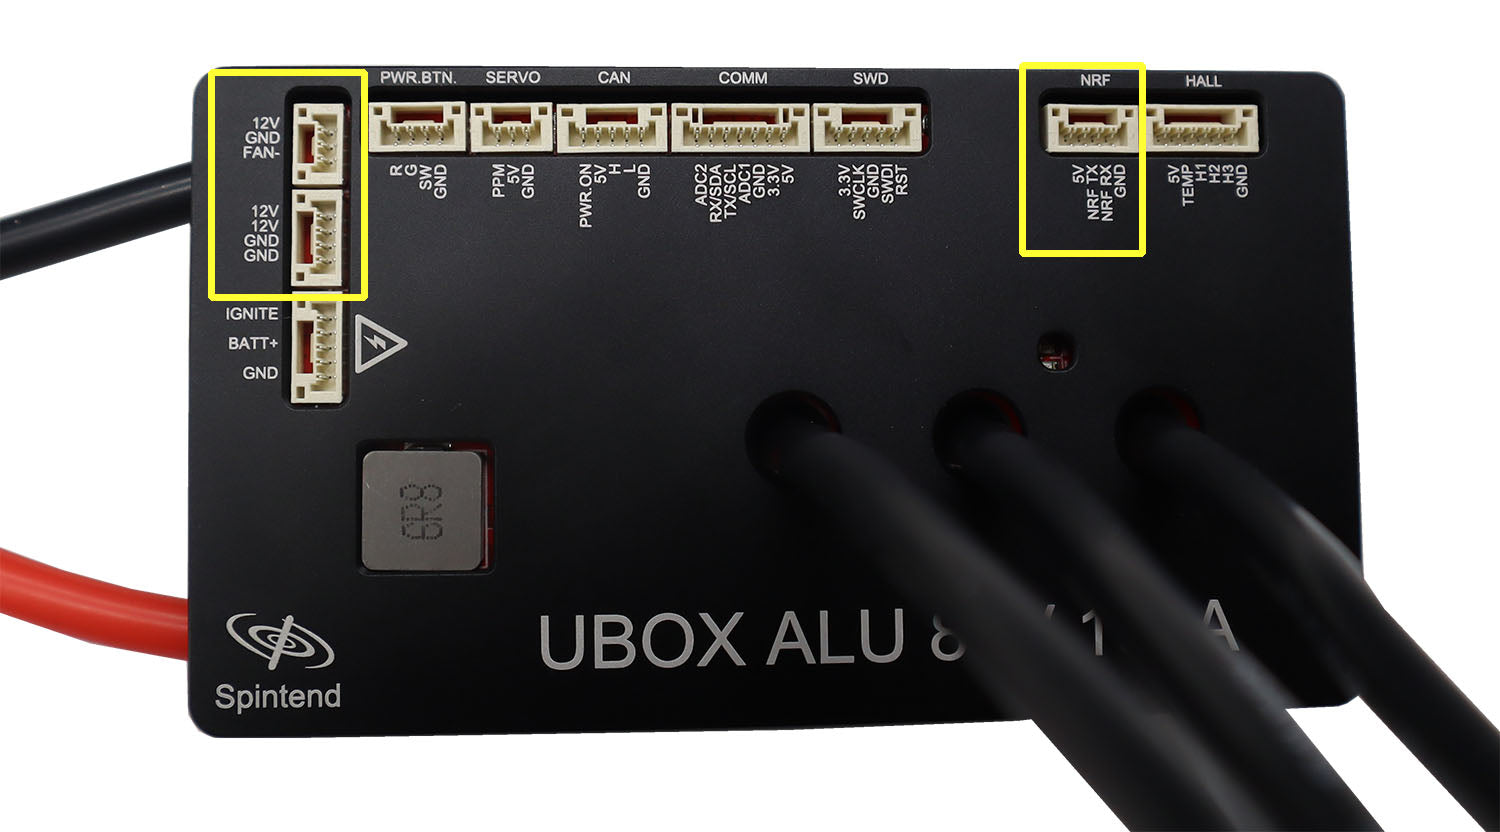 ubox aluminum 12v ports and fan port function